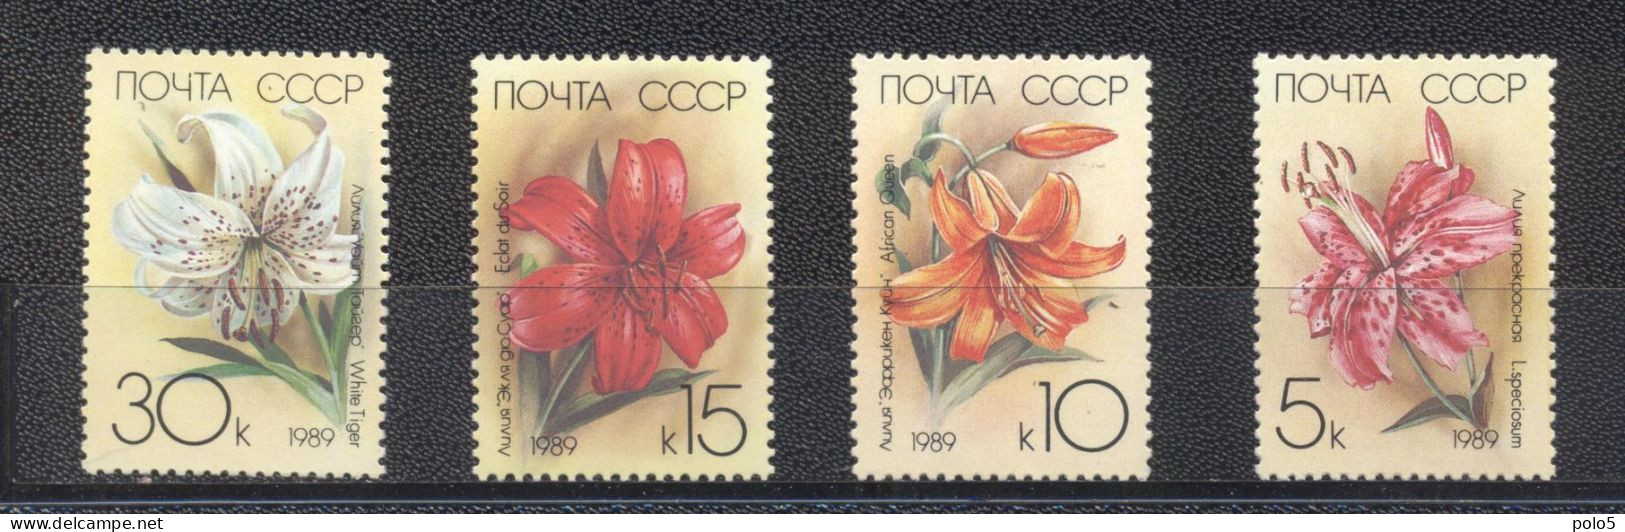 URSS 1989-Lilies Set (4v) - Unused Stamps